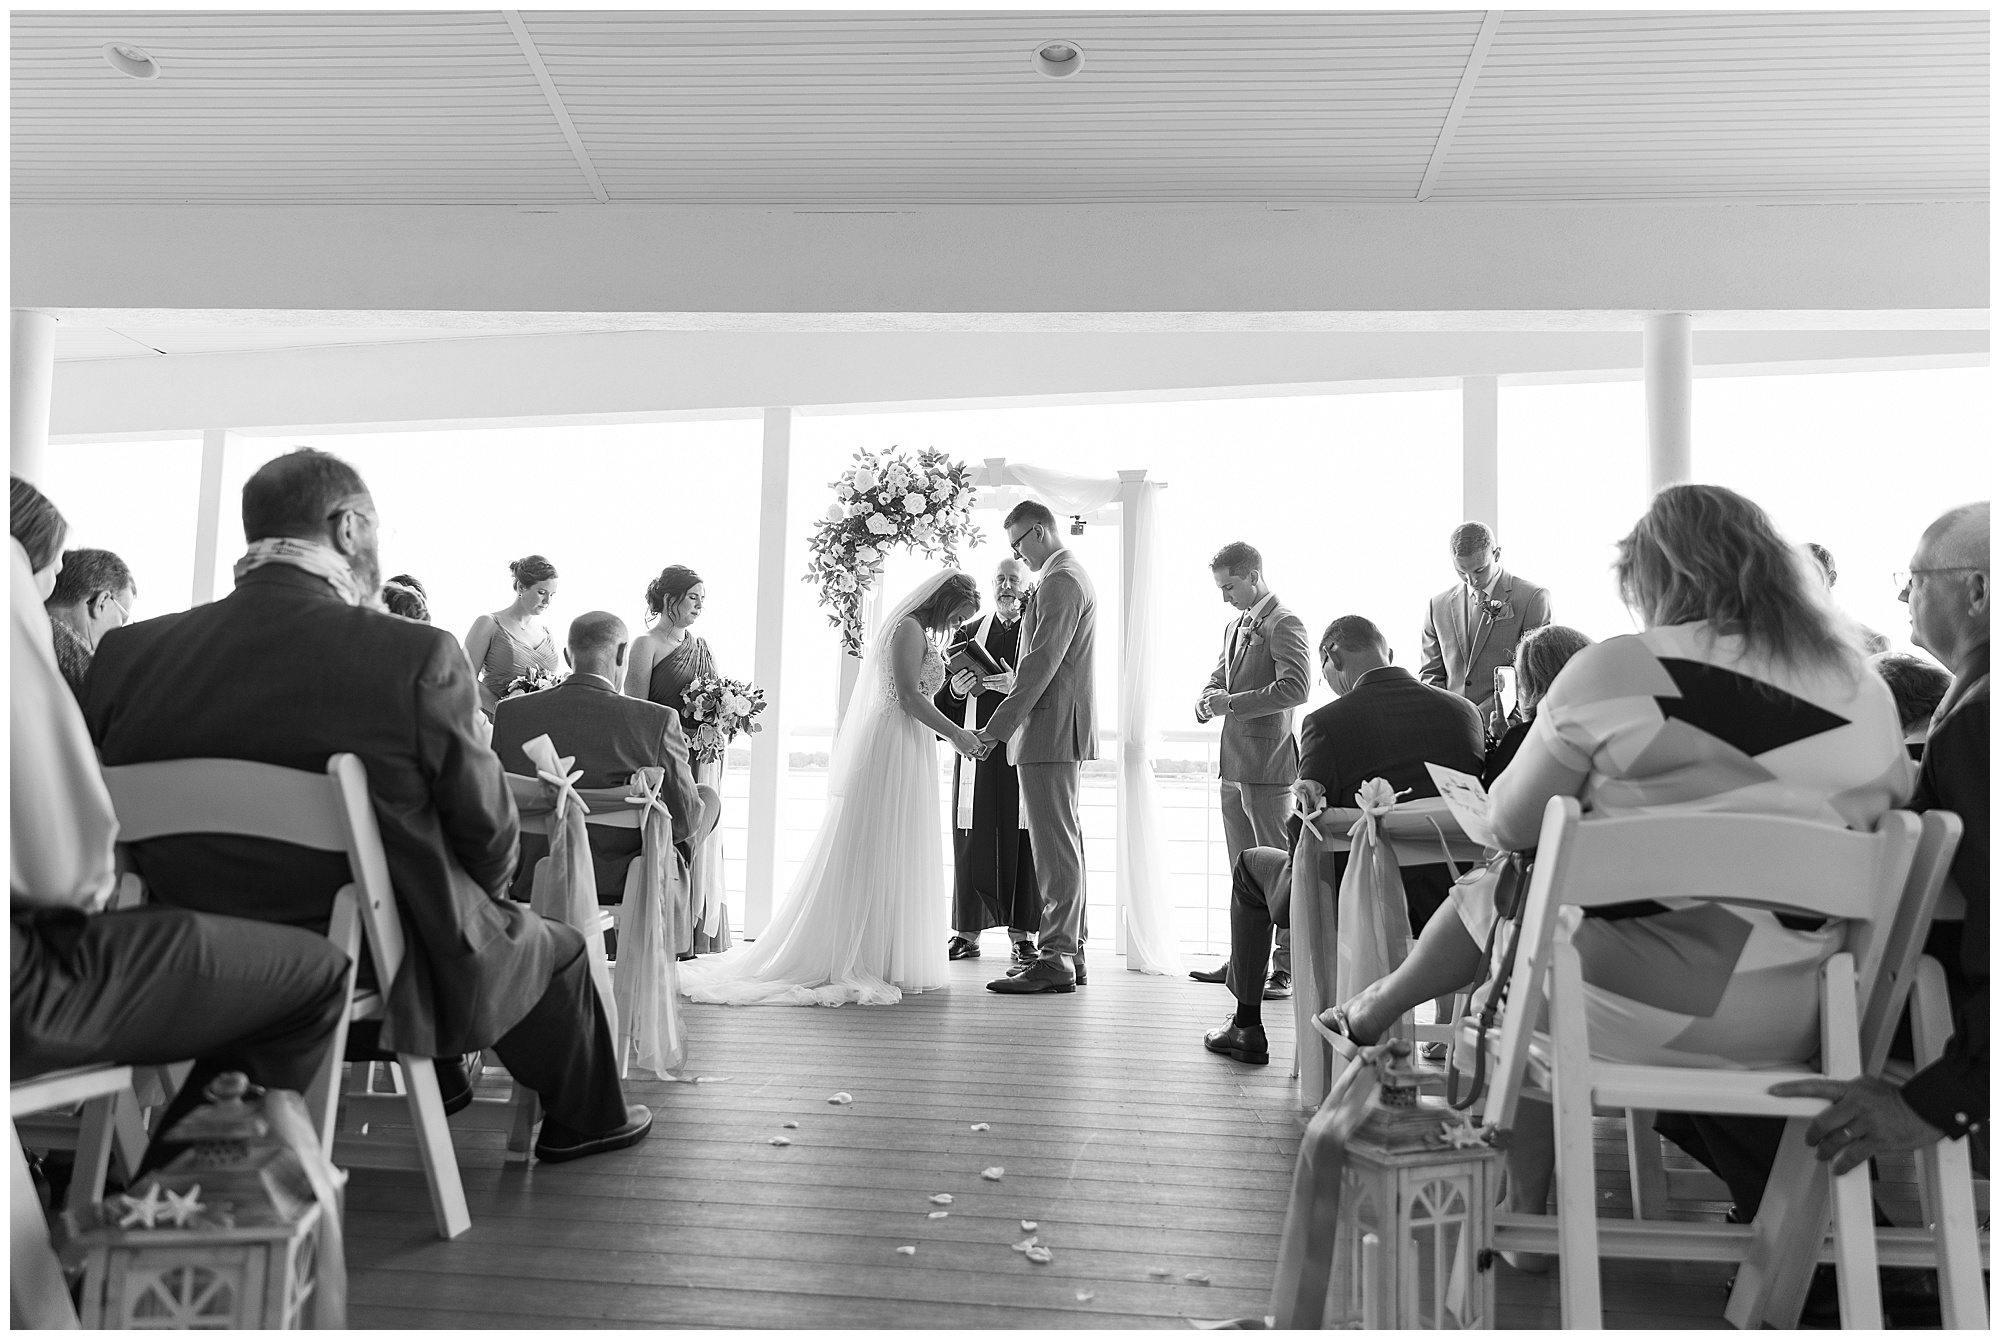 Lesner Inn Wedding,Kelley Stinson Photography,Hampton Roads Wedding Photographer,Virginia Beach Photographer,